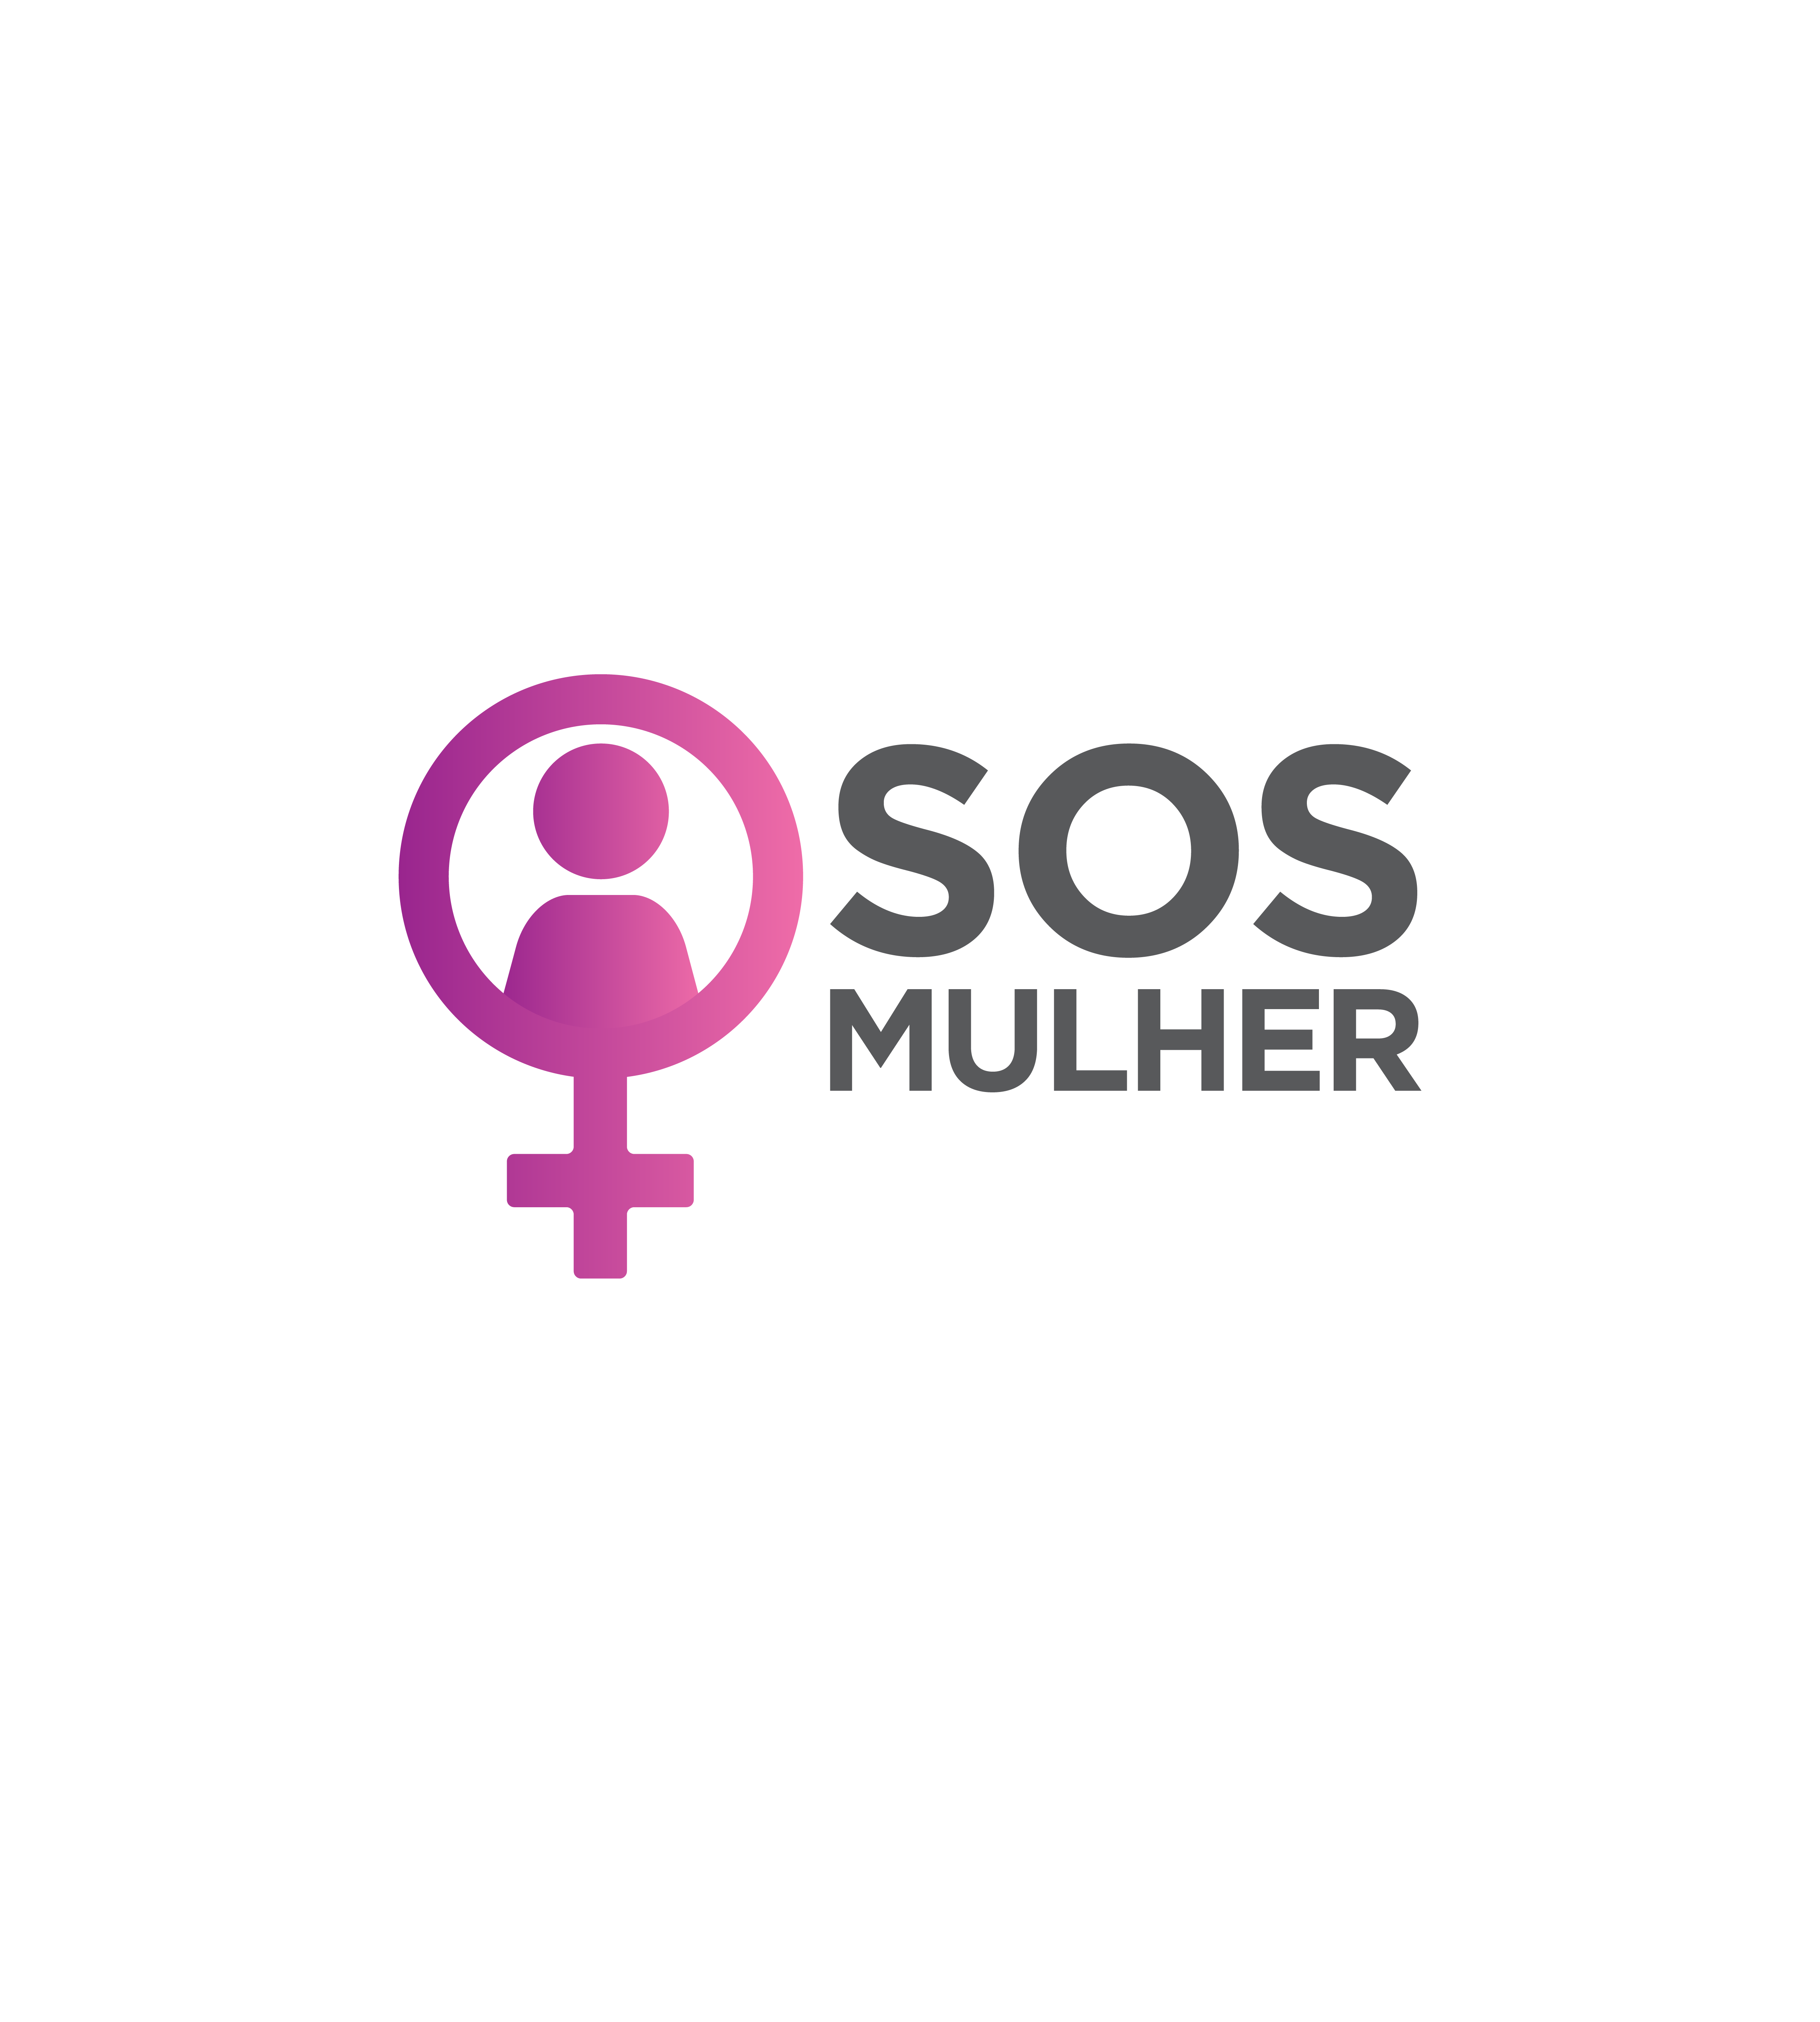 SOS MULHER